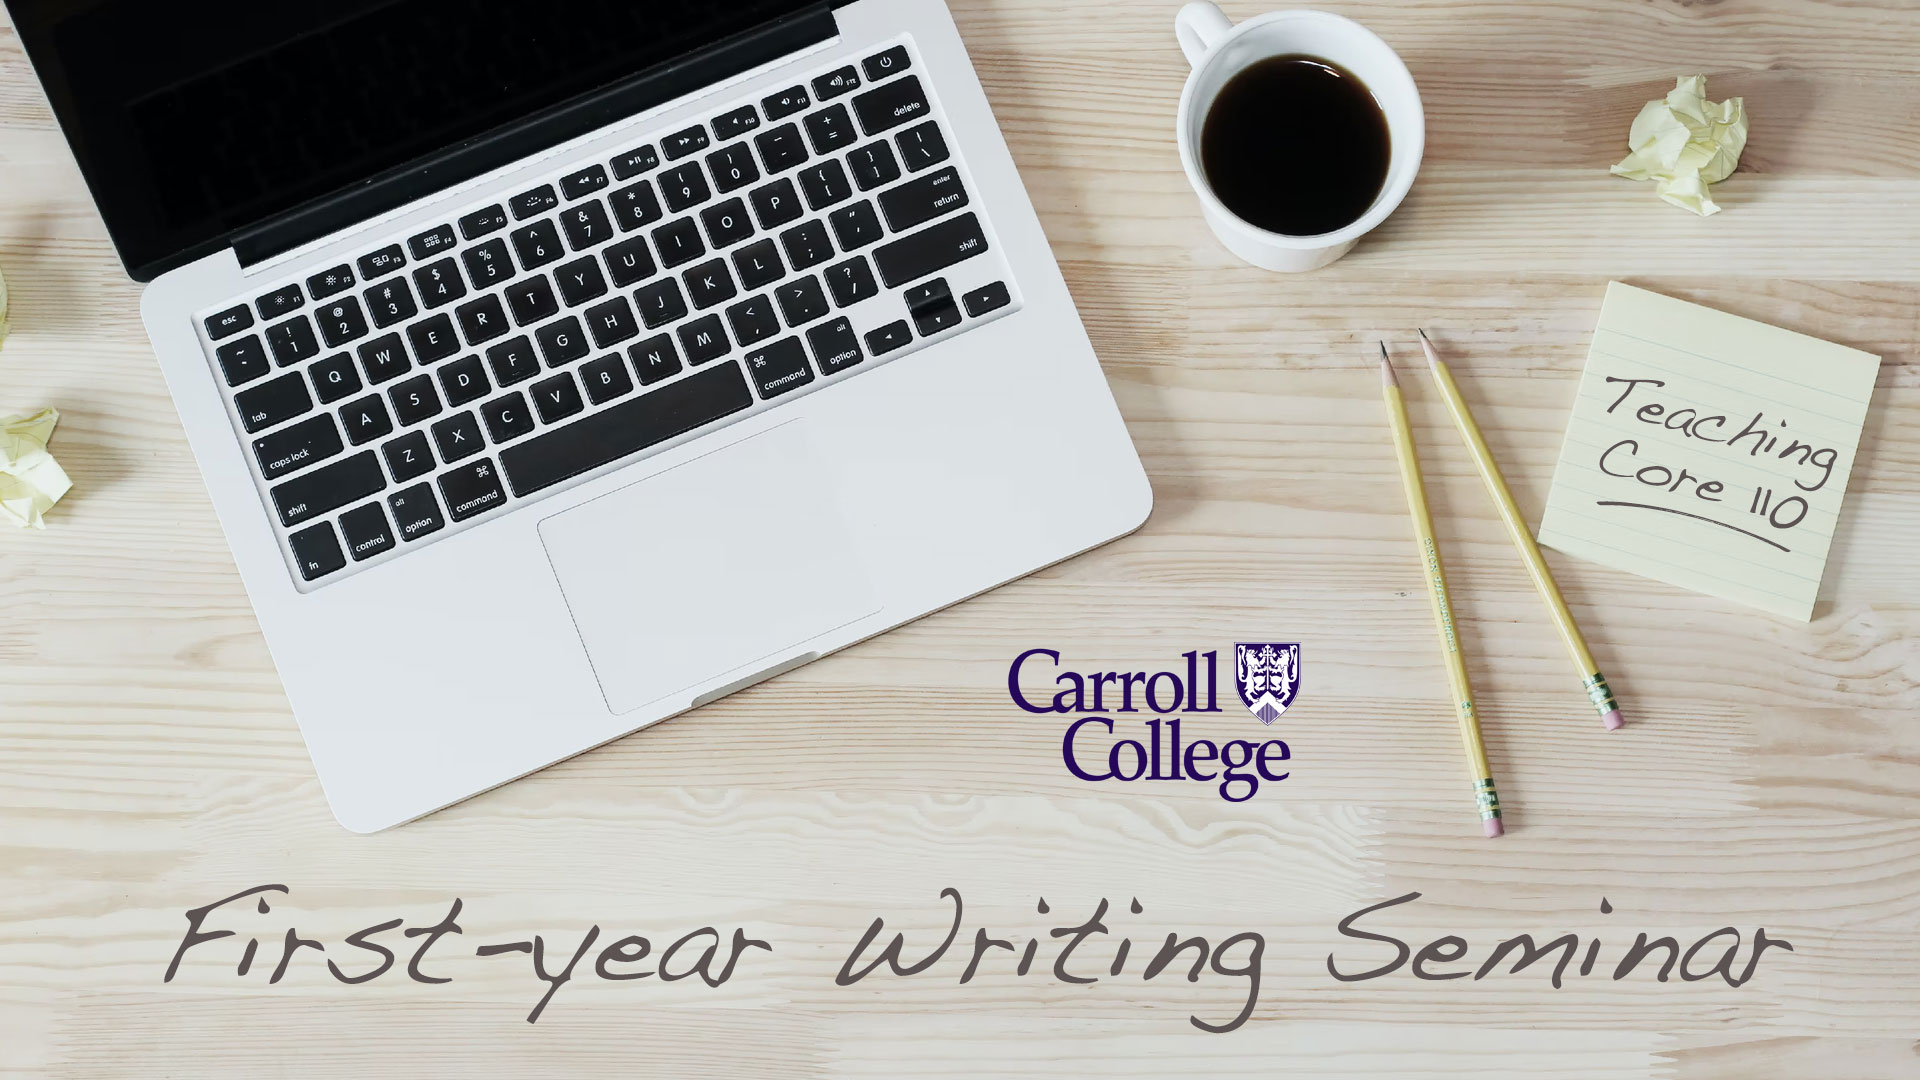 First-year Writing Seminar Teaching Core 110